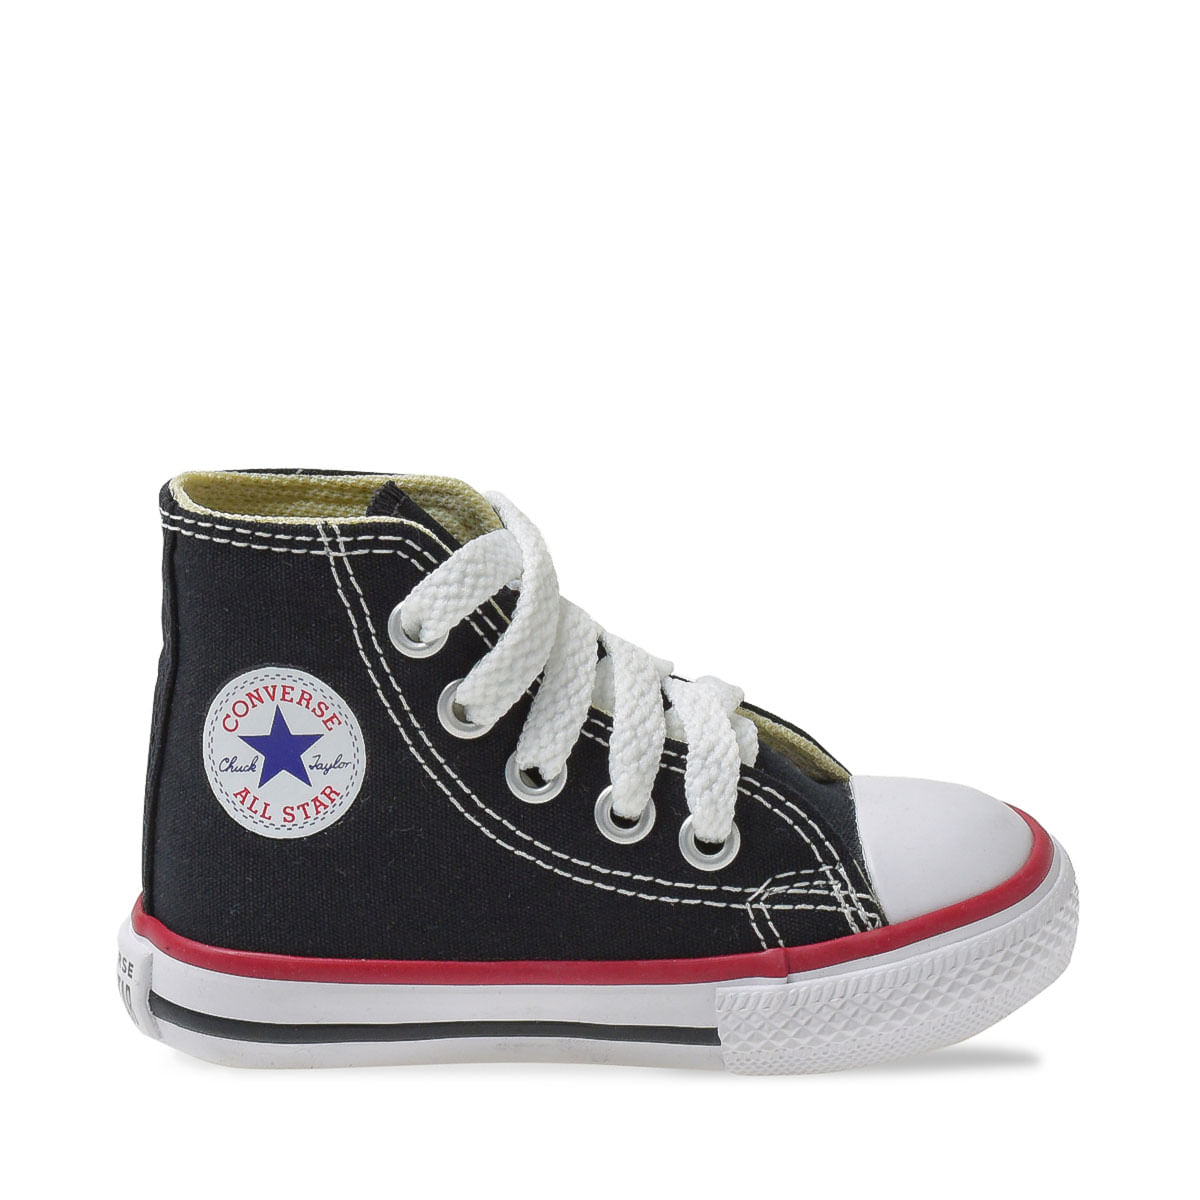 Converse All Star Tênis Plataforma - Menina Shoes